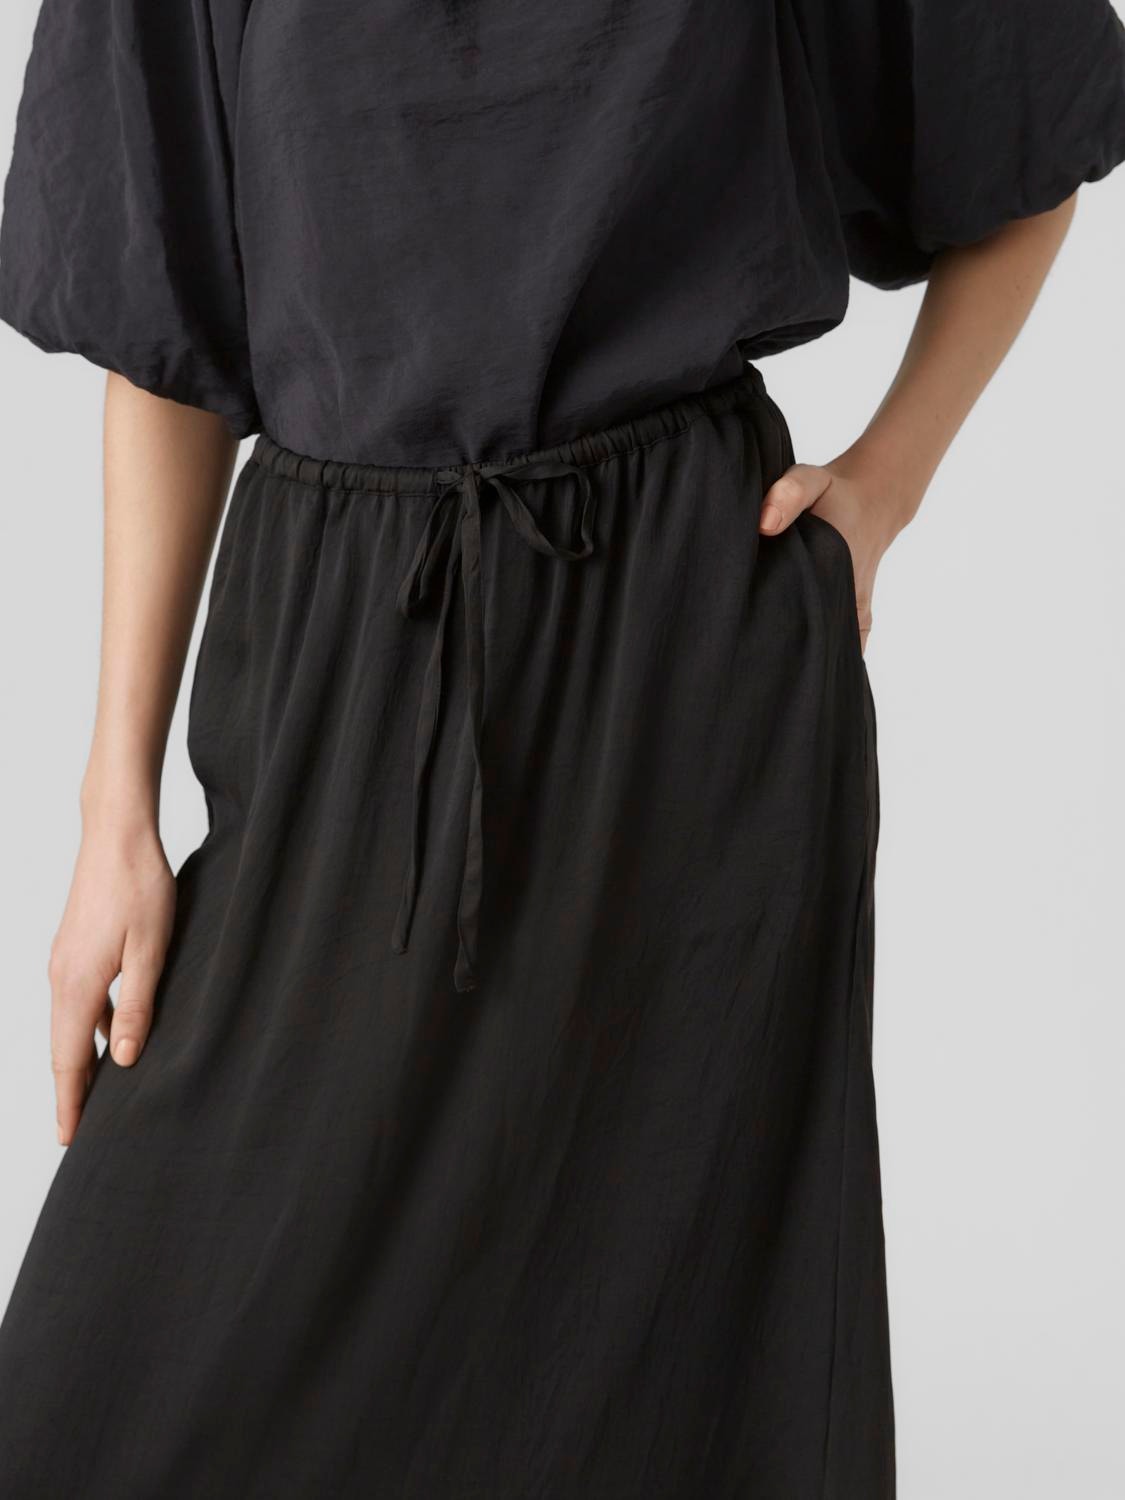 Vero Moda VMFABIANA Long Skirt -Black - 10290484